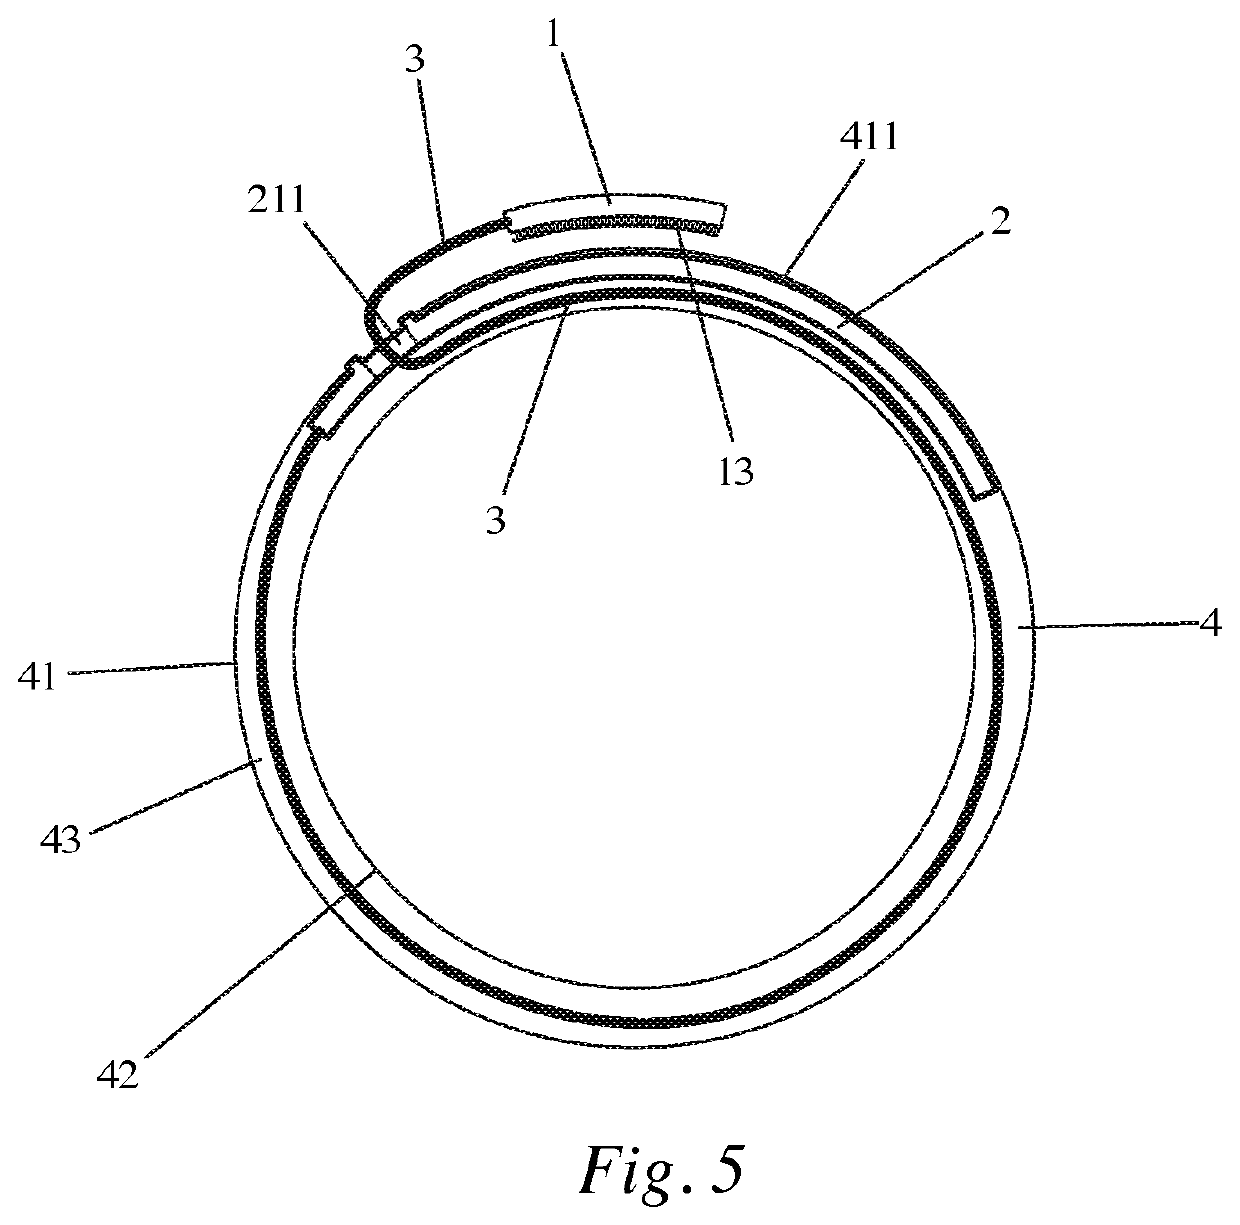 Adjusting strap for adjusting tube orifice diameter of flexible tube-shaped object